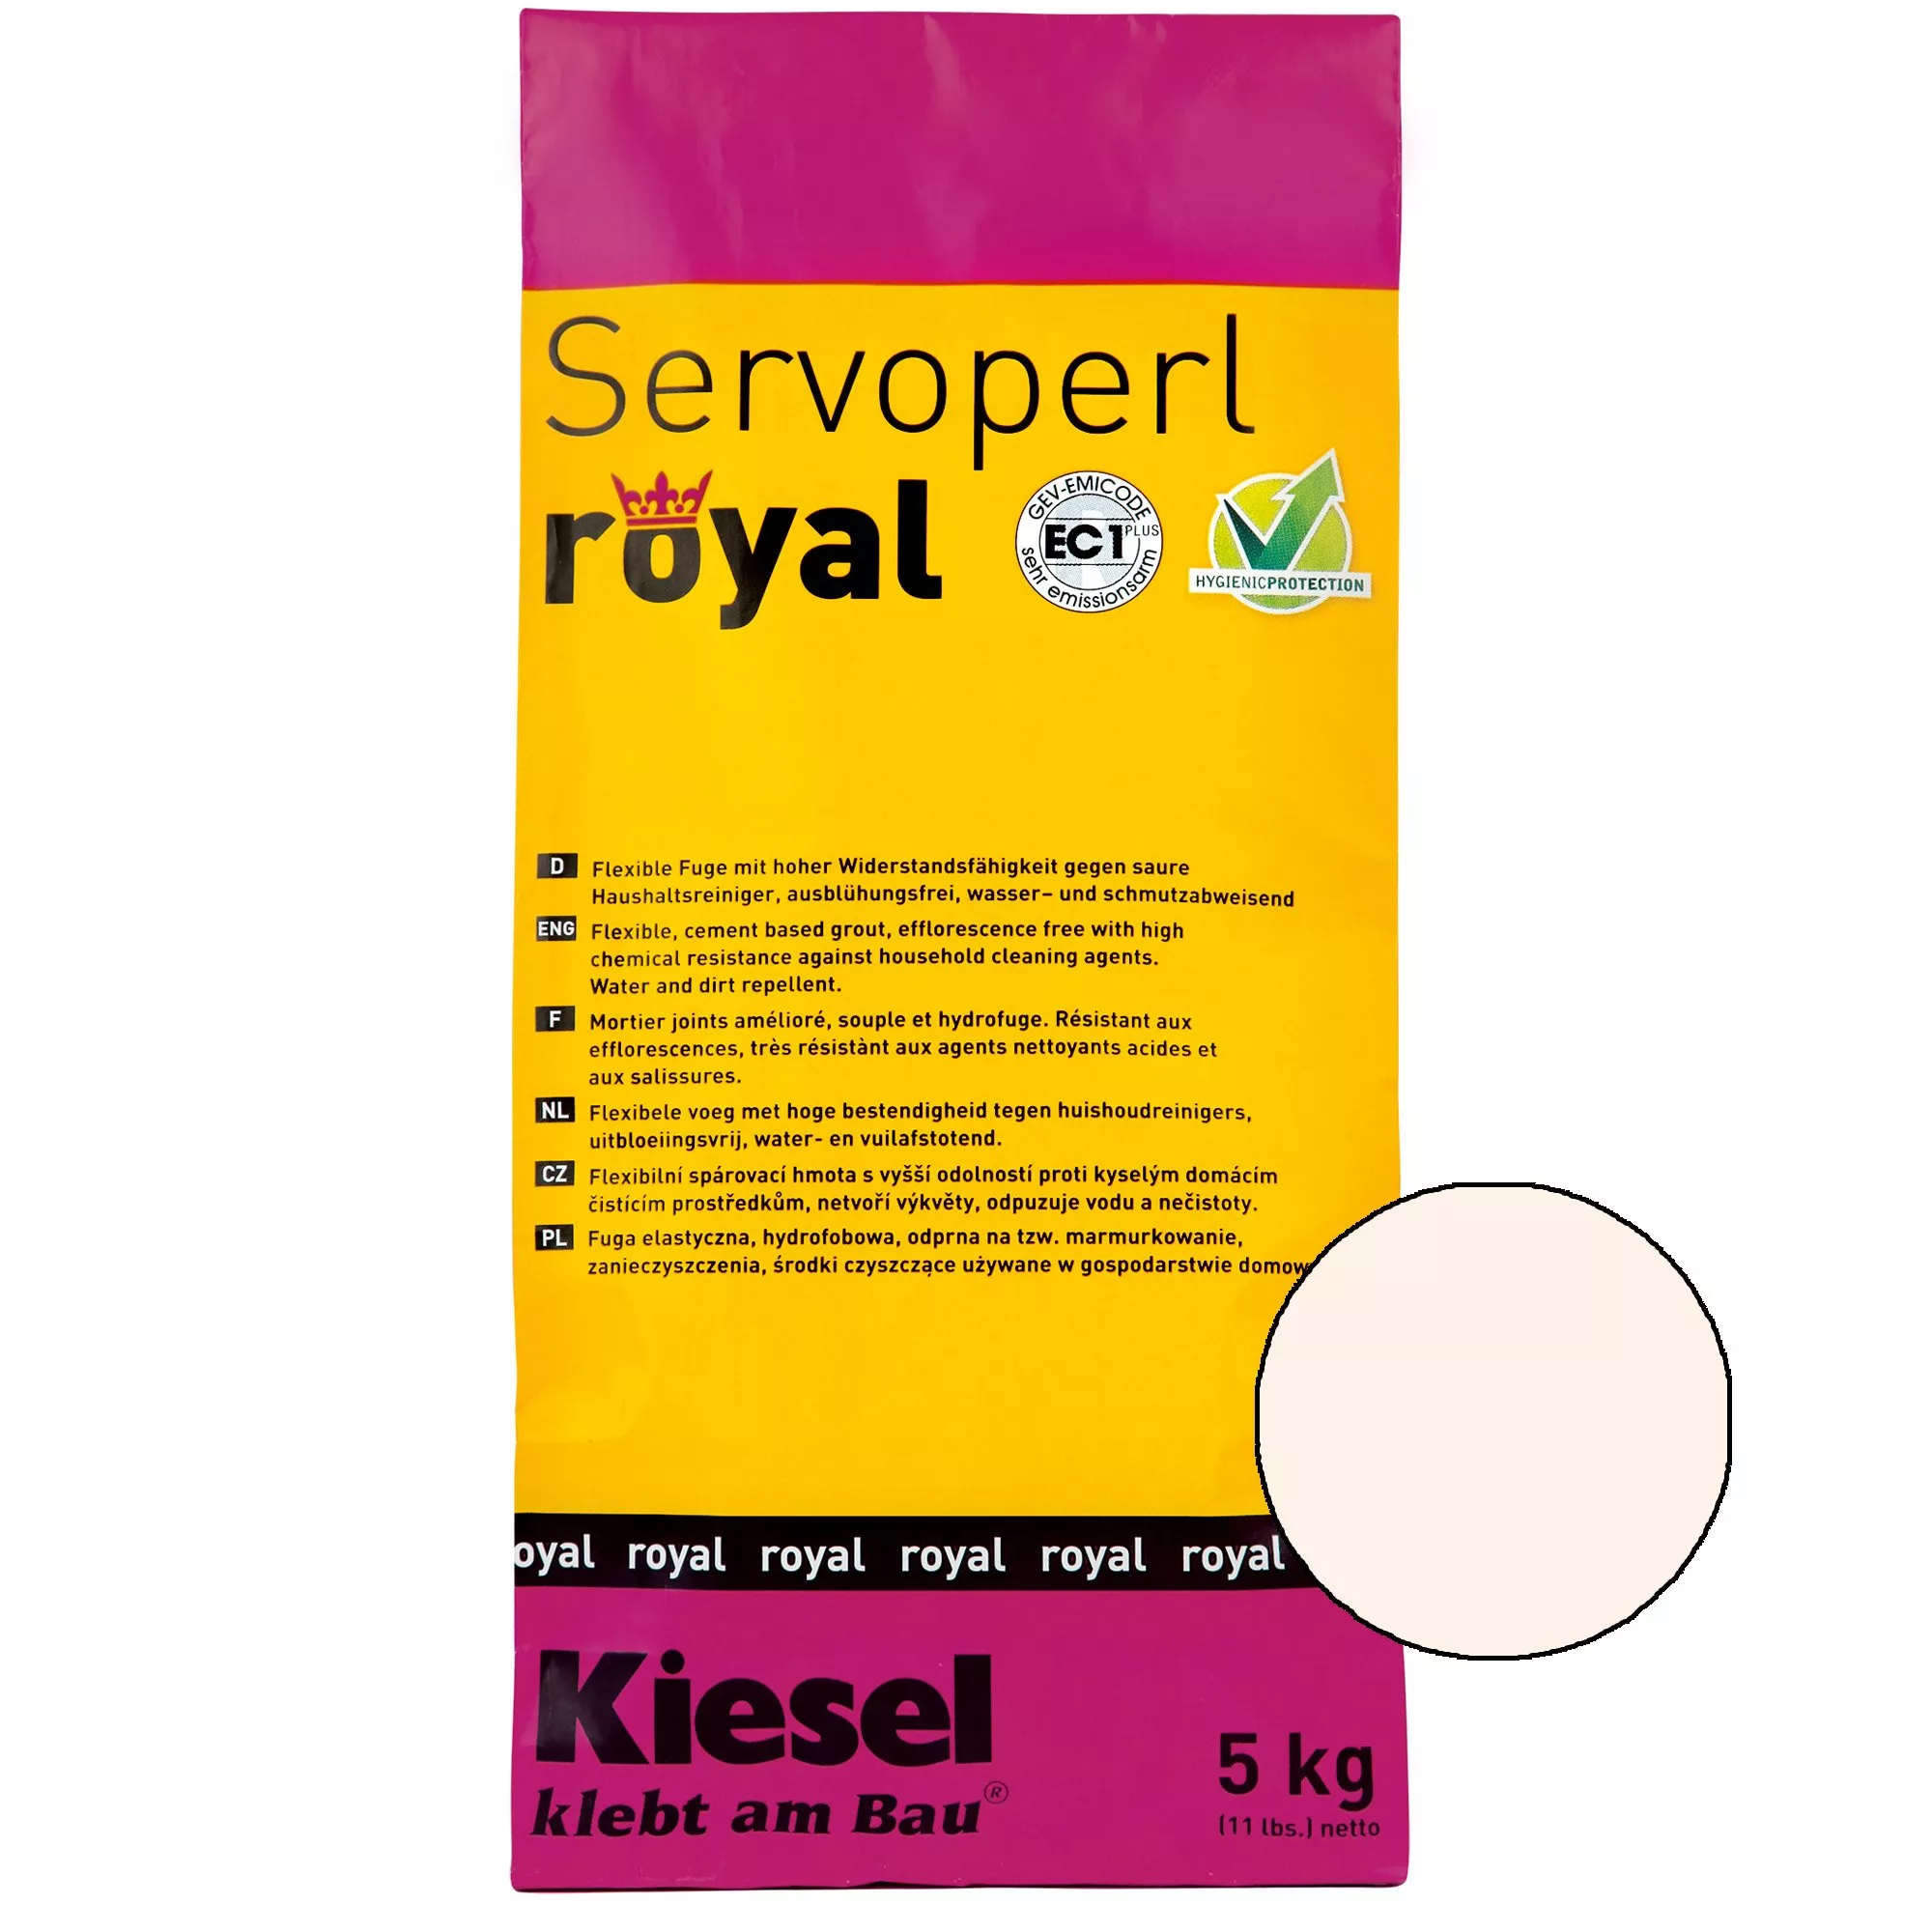 Kiesel Servoperl Royal - Giunto Flessibile, Idrorepellente E Antimacchia (5KG Pergamon)